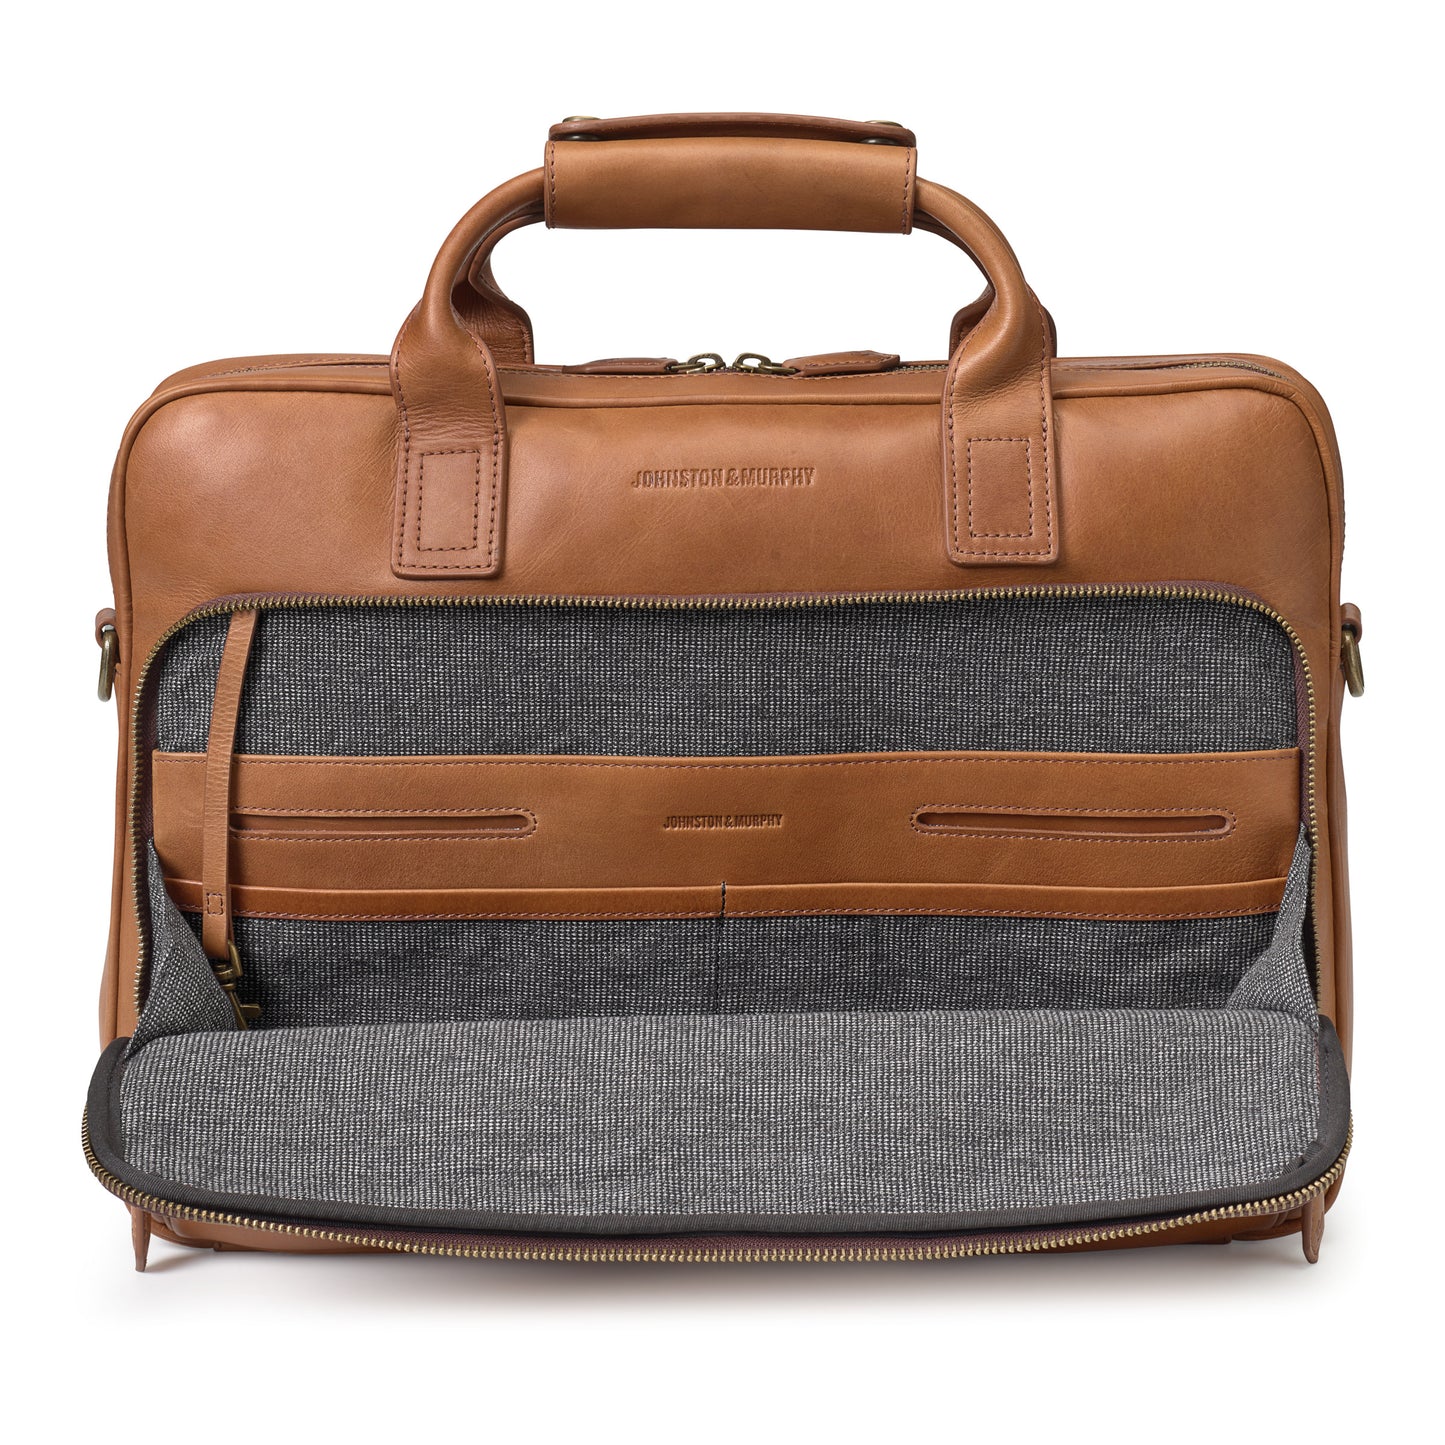 Johnston & Murphy Rhodes Briefcase in Tan Full Grain Leather